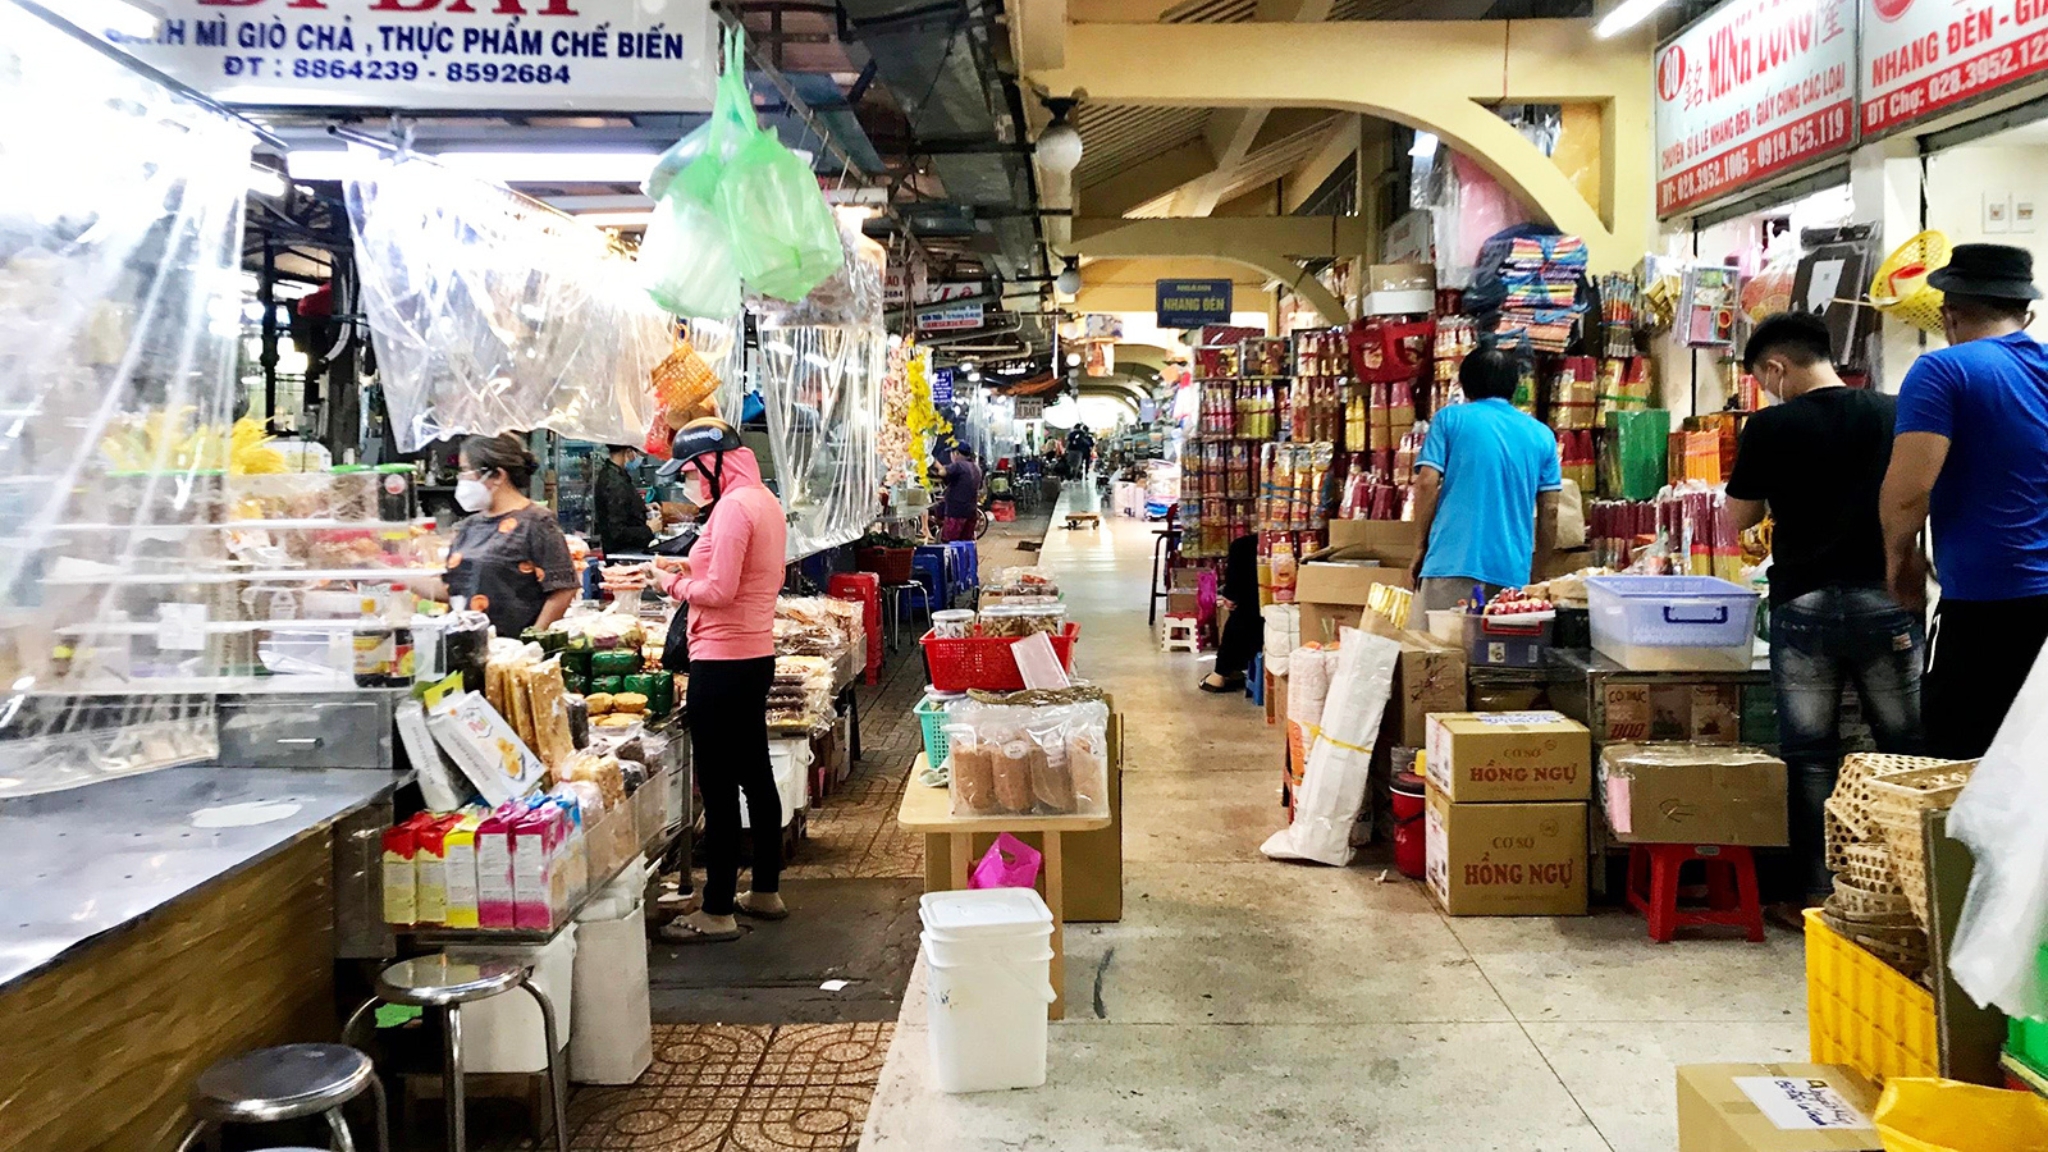 Stalls Inside The Market